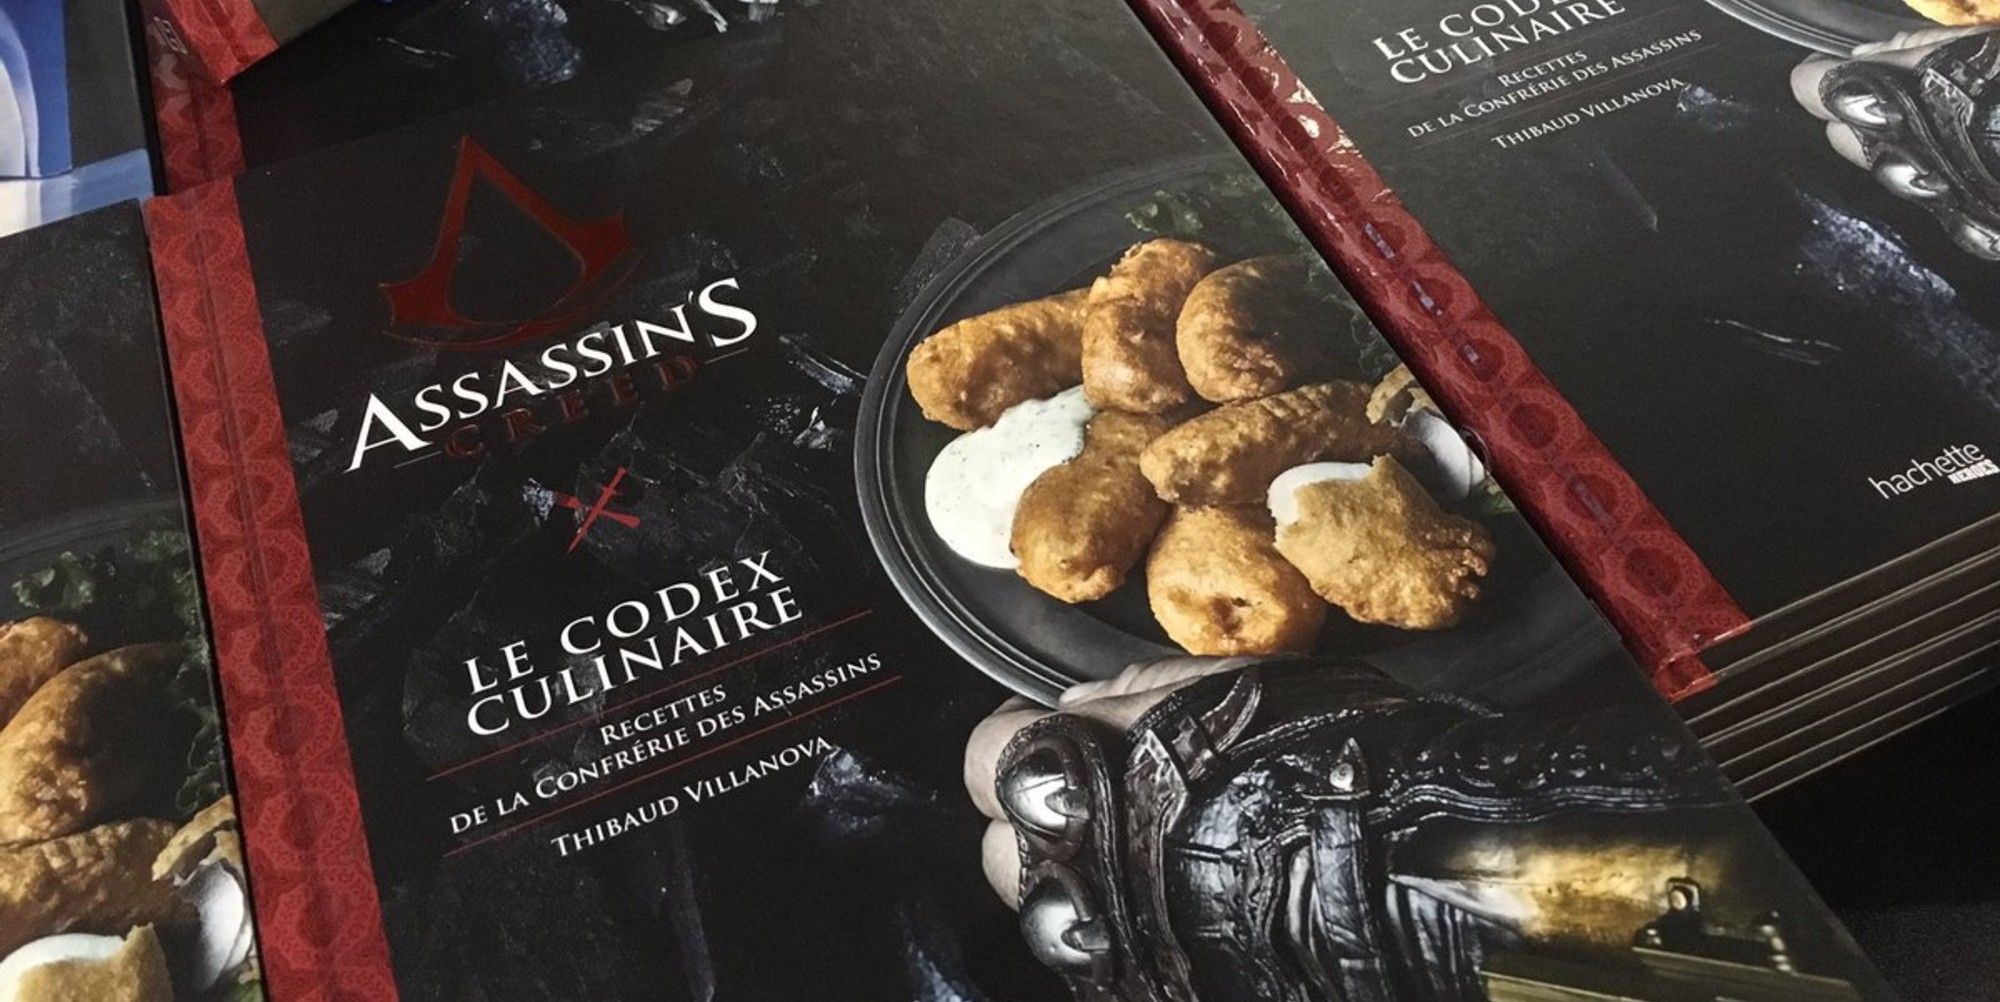 I-Assassins Creed Culinary Codex (1)